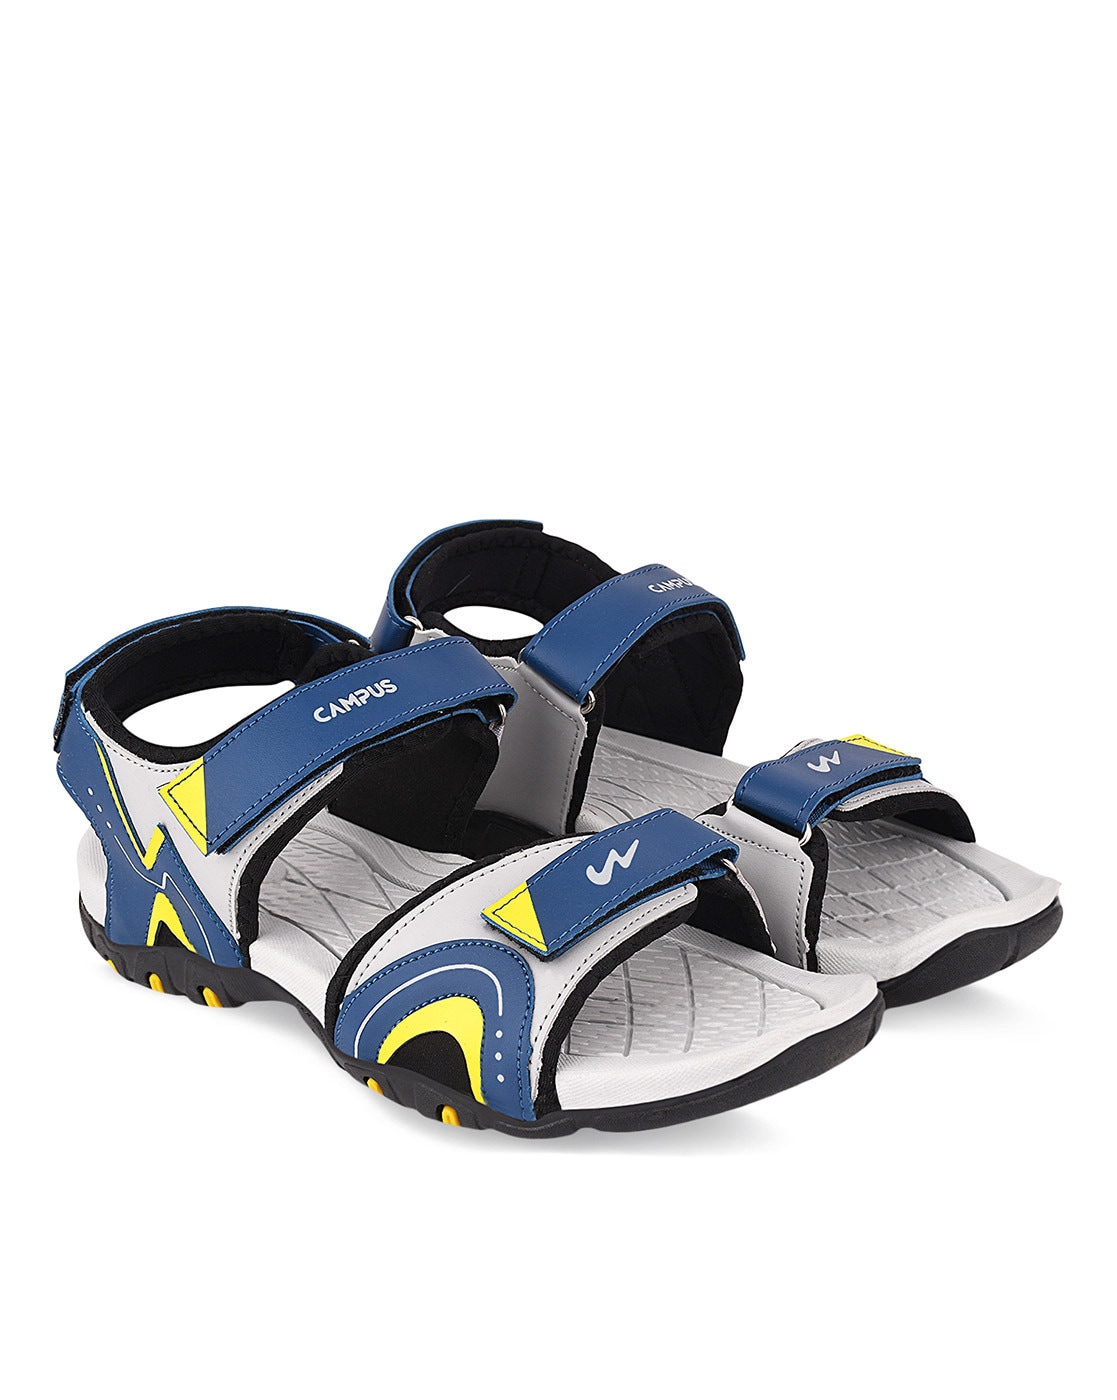 Sparx Men's Ss-616 Floater Sandals | TOWRCO